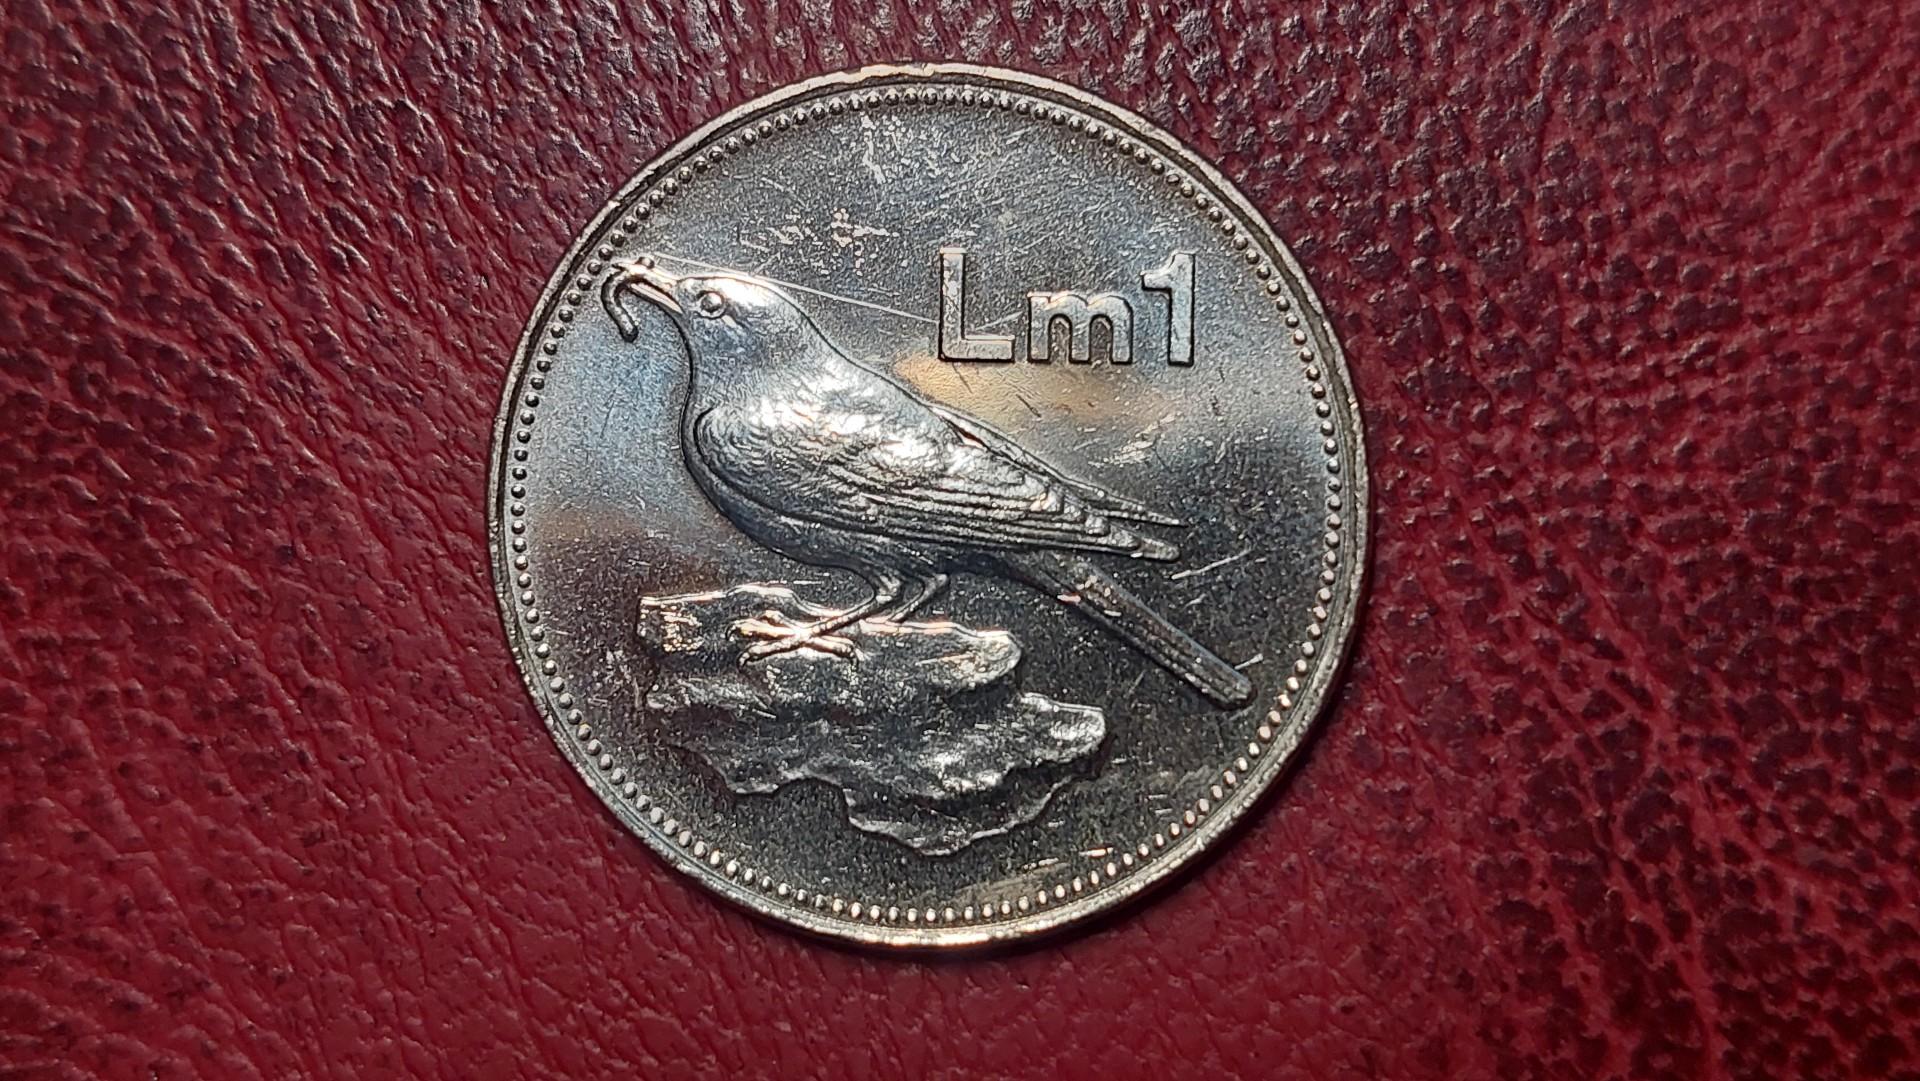 Malta 1 lira, 2000 KM# 99